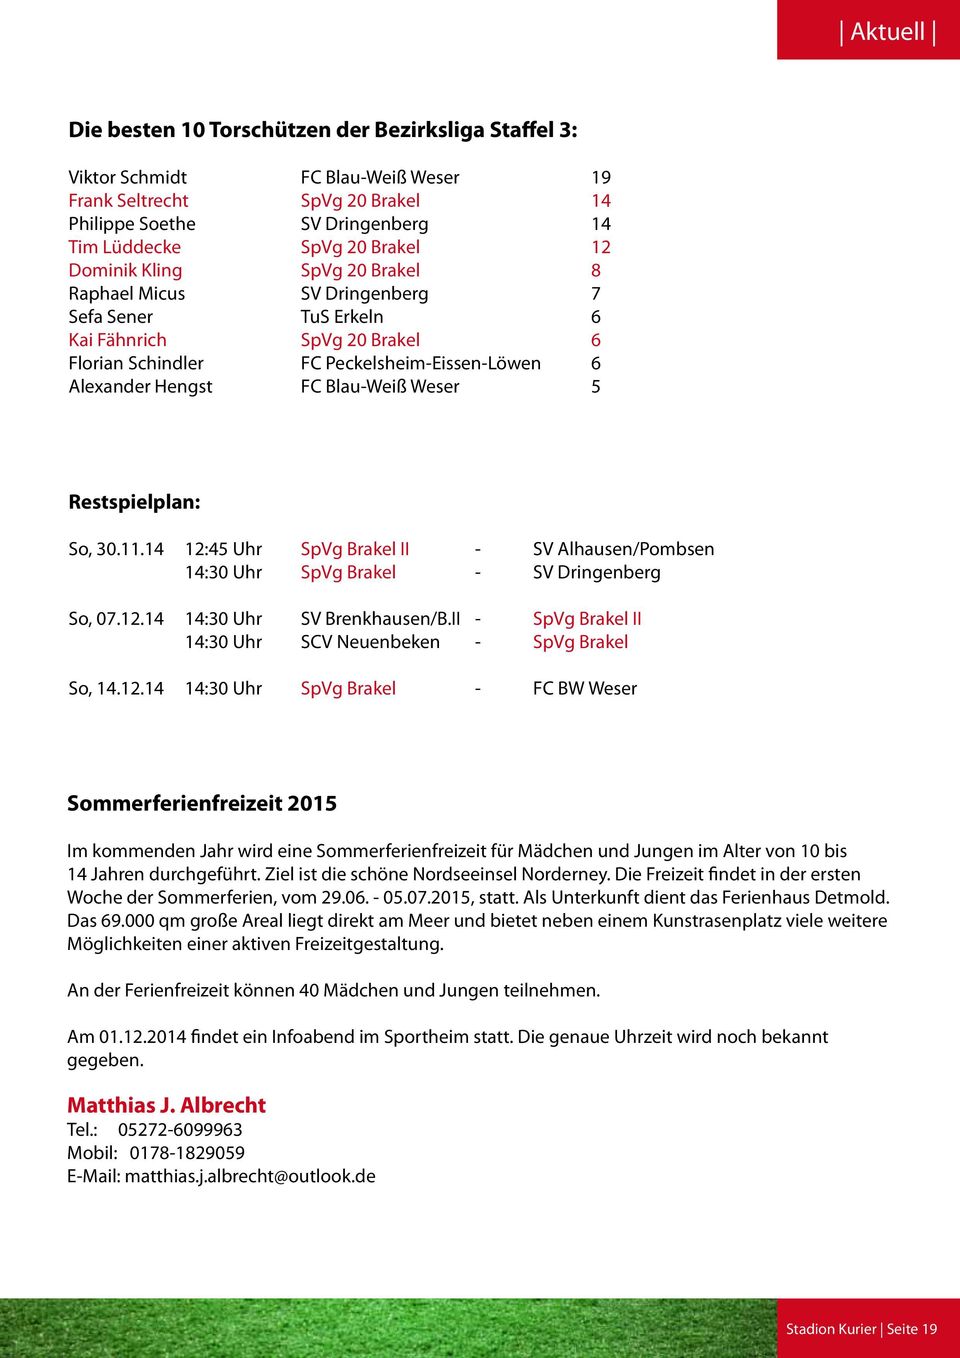 5 Restspielplan: So, 30.11.14 12:45 Uhr SpVg Brakel II - SV Alhausen/Pombsen 14:30 Uhr SpVg Brakel - SV Dringenberg So, 07.12.14 14:30 Uhr SV Brenkhausen/B.